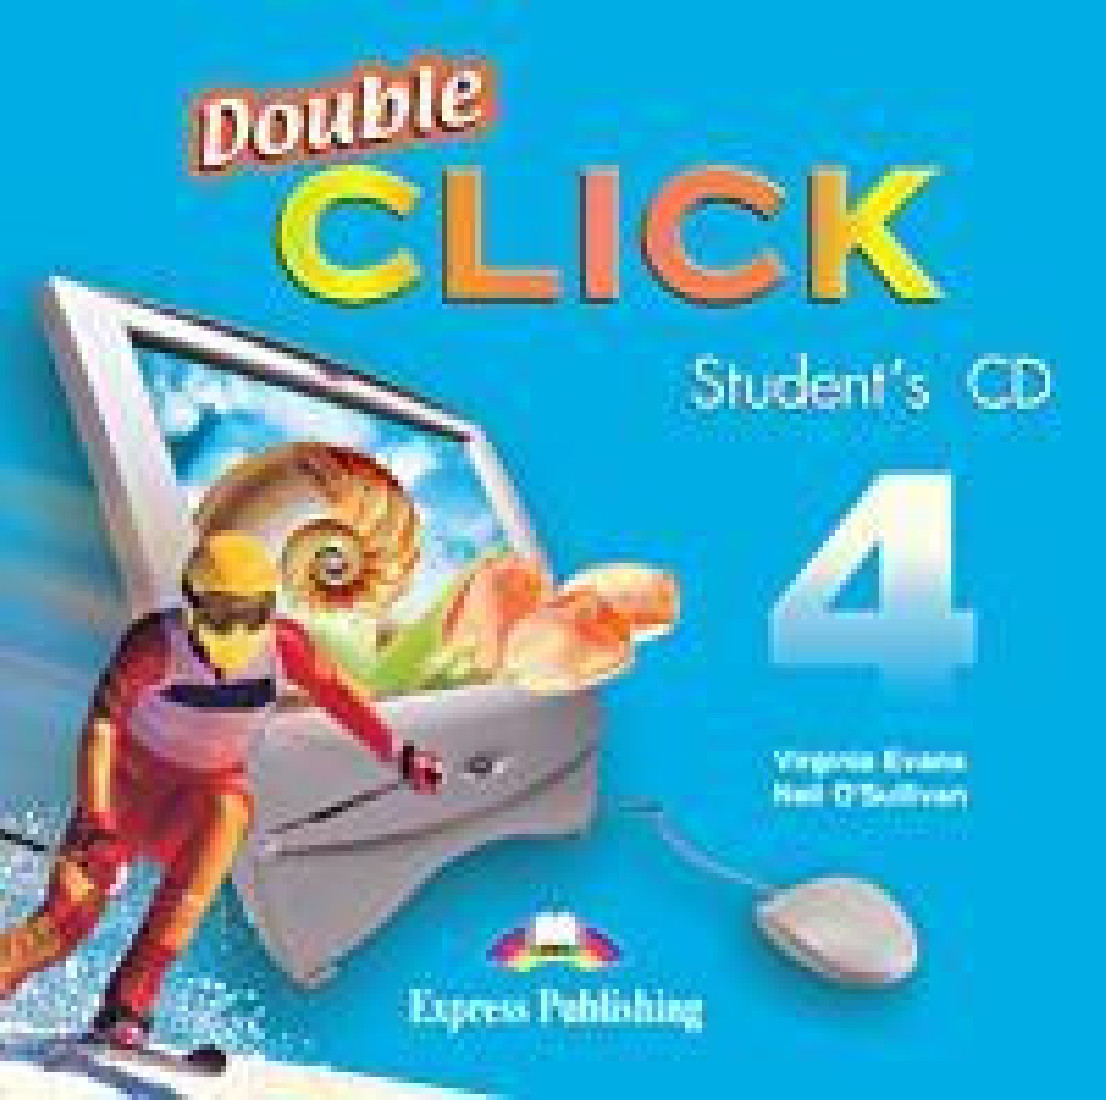 DOUBLE CLICK 4 PUPILS CD